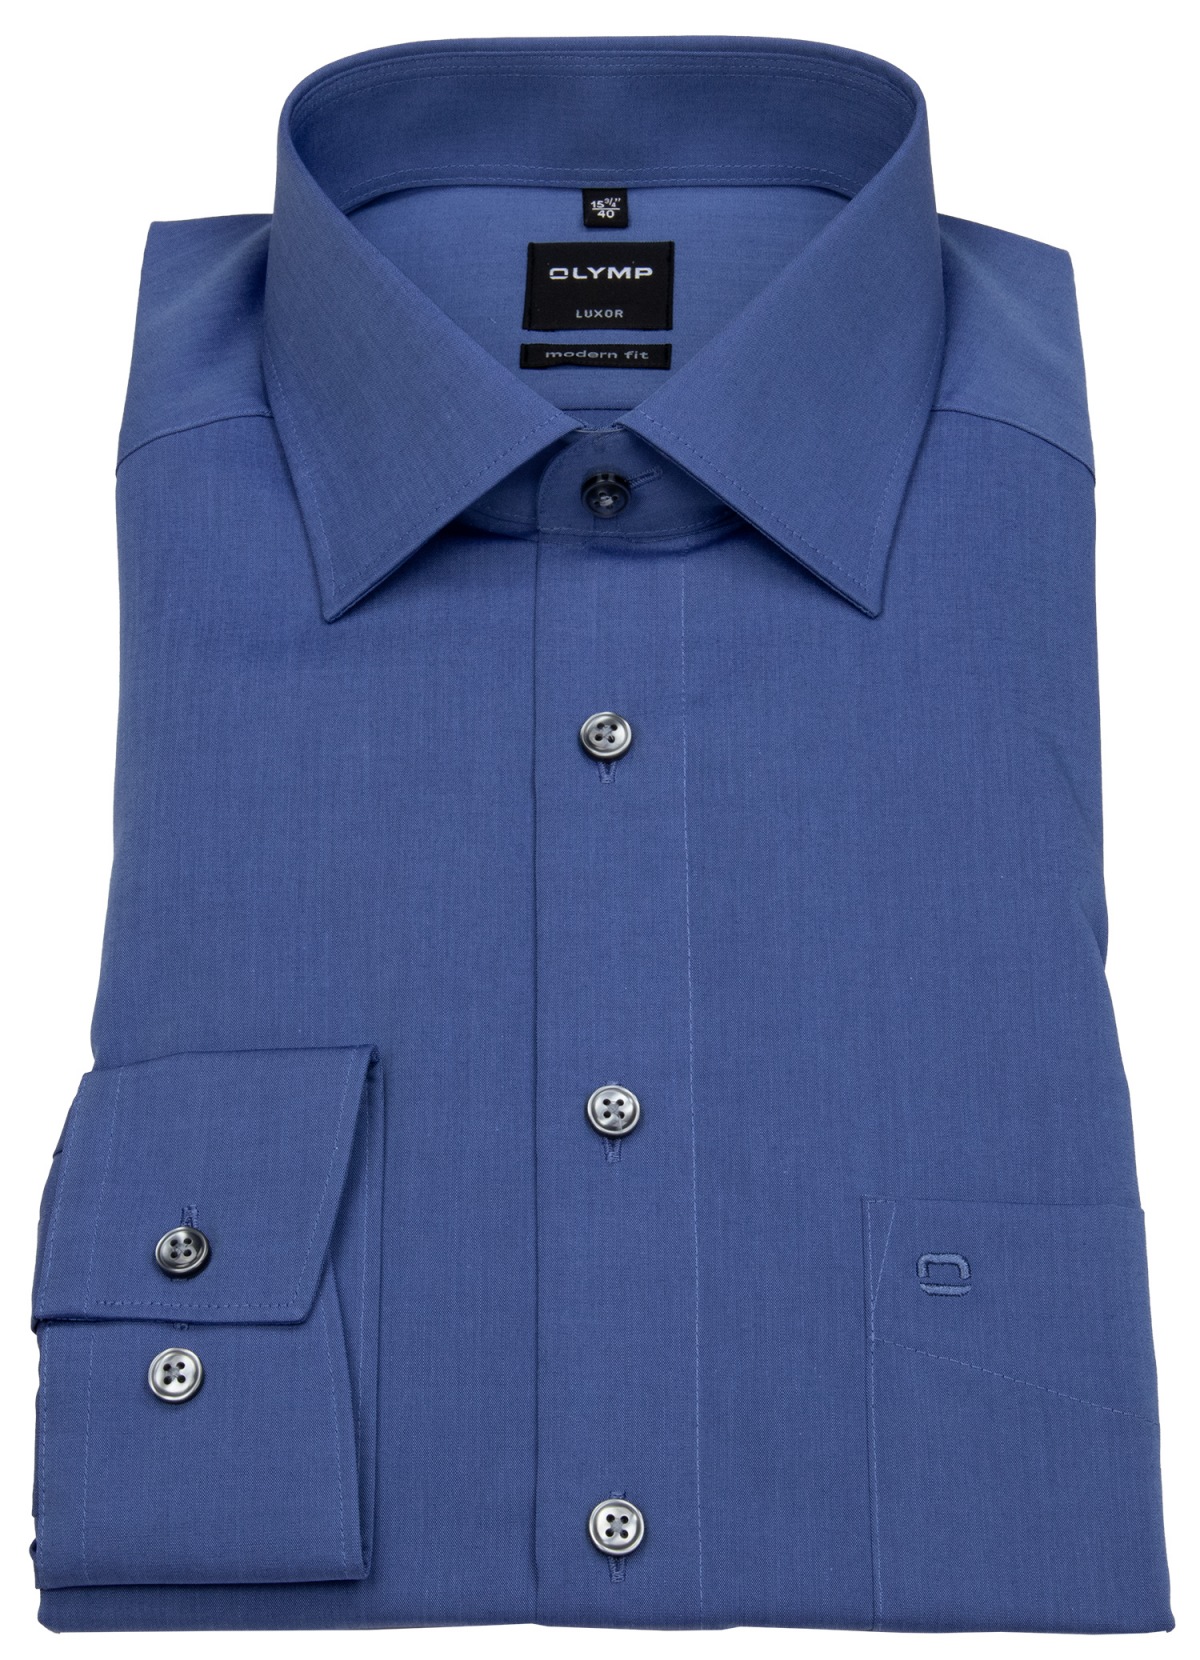 OLYMP Hemd - Luxor Modern Fit - Chambray - graublau | Klassische Hemden